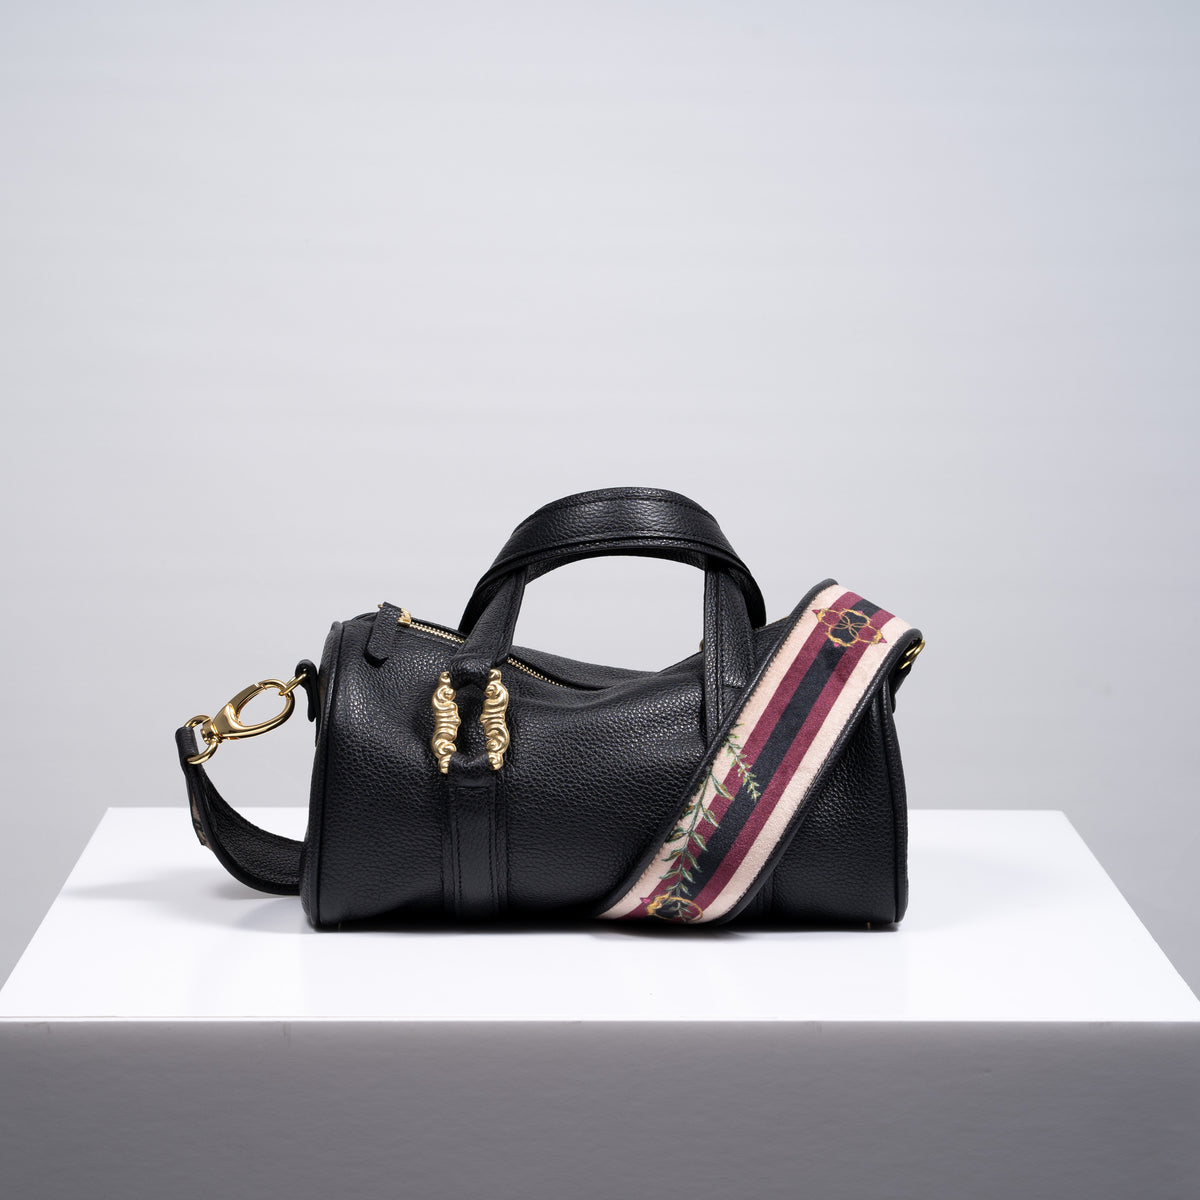 Atena Leather Duffle Bag
- Black